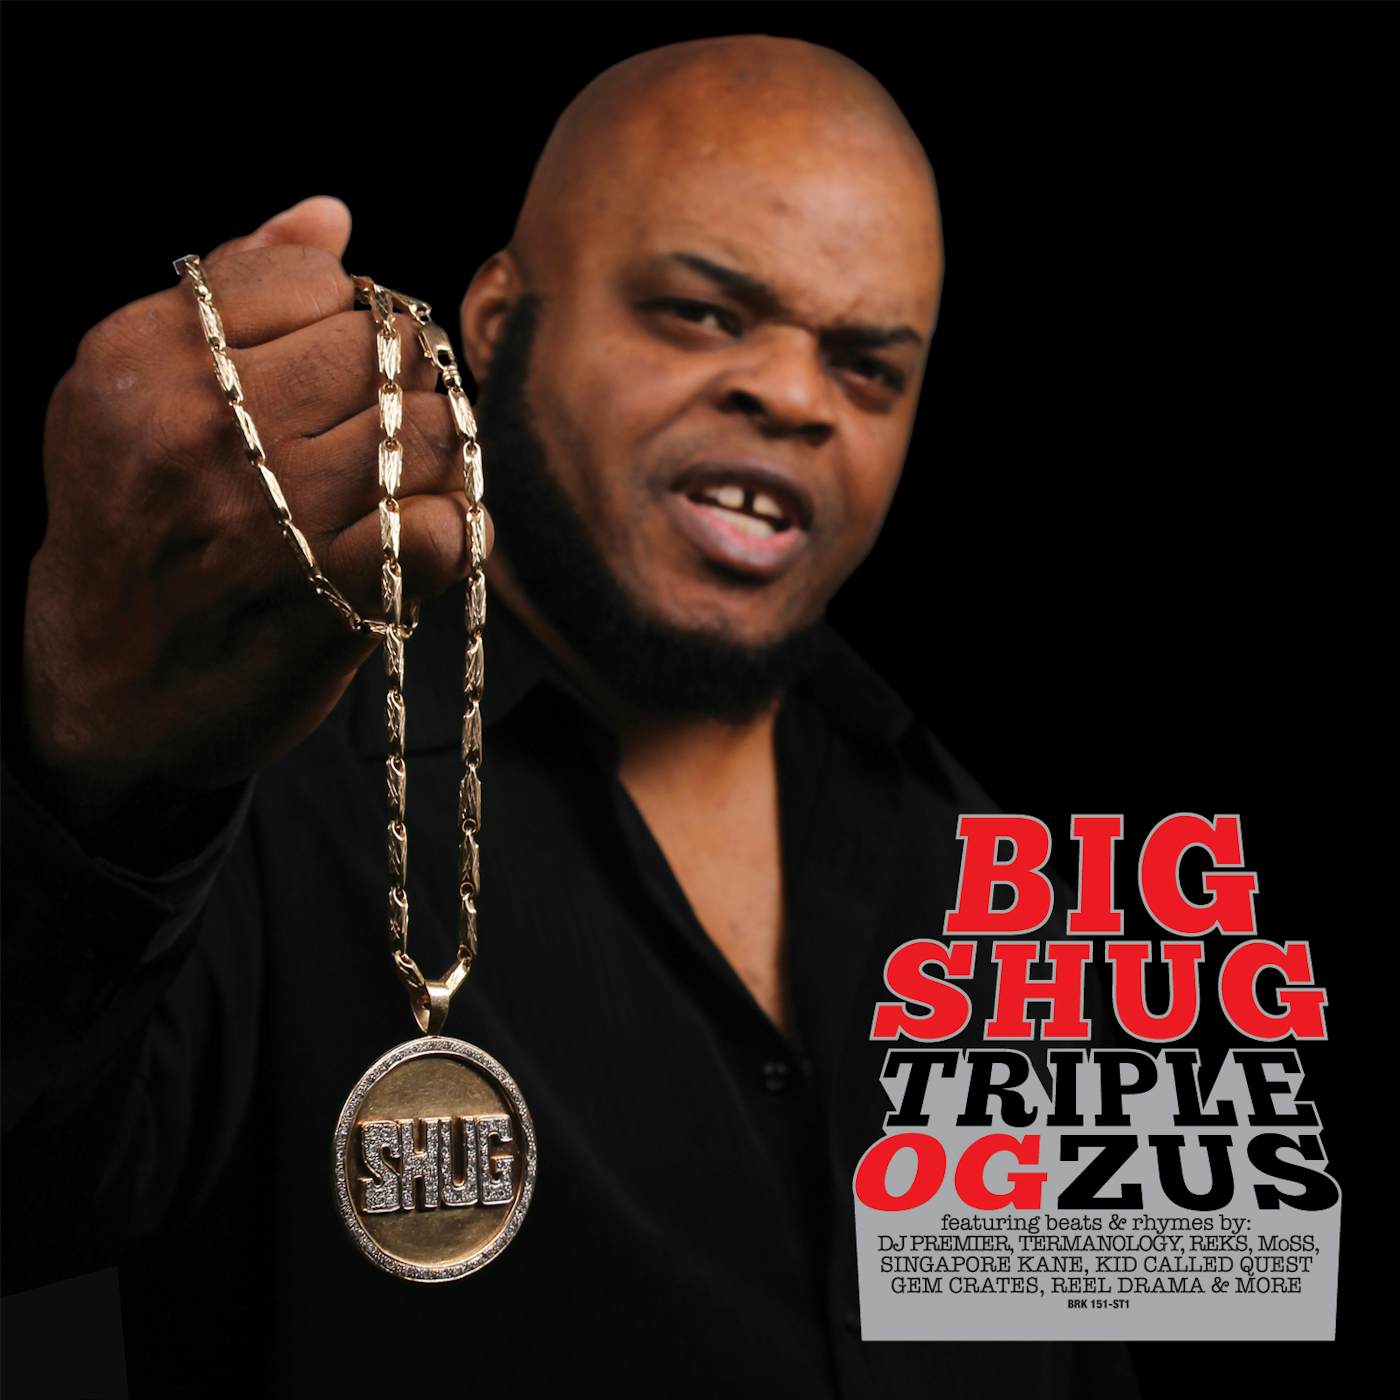 Big Shug TRIPLE OGZUS CD